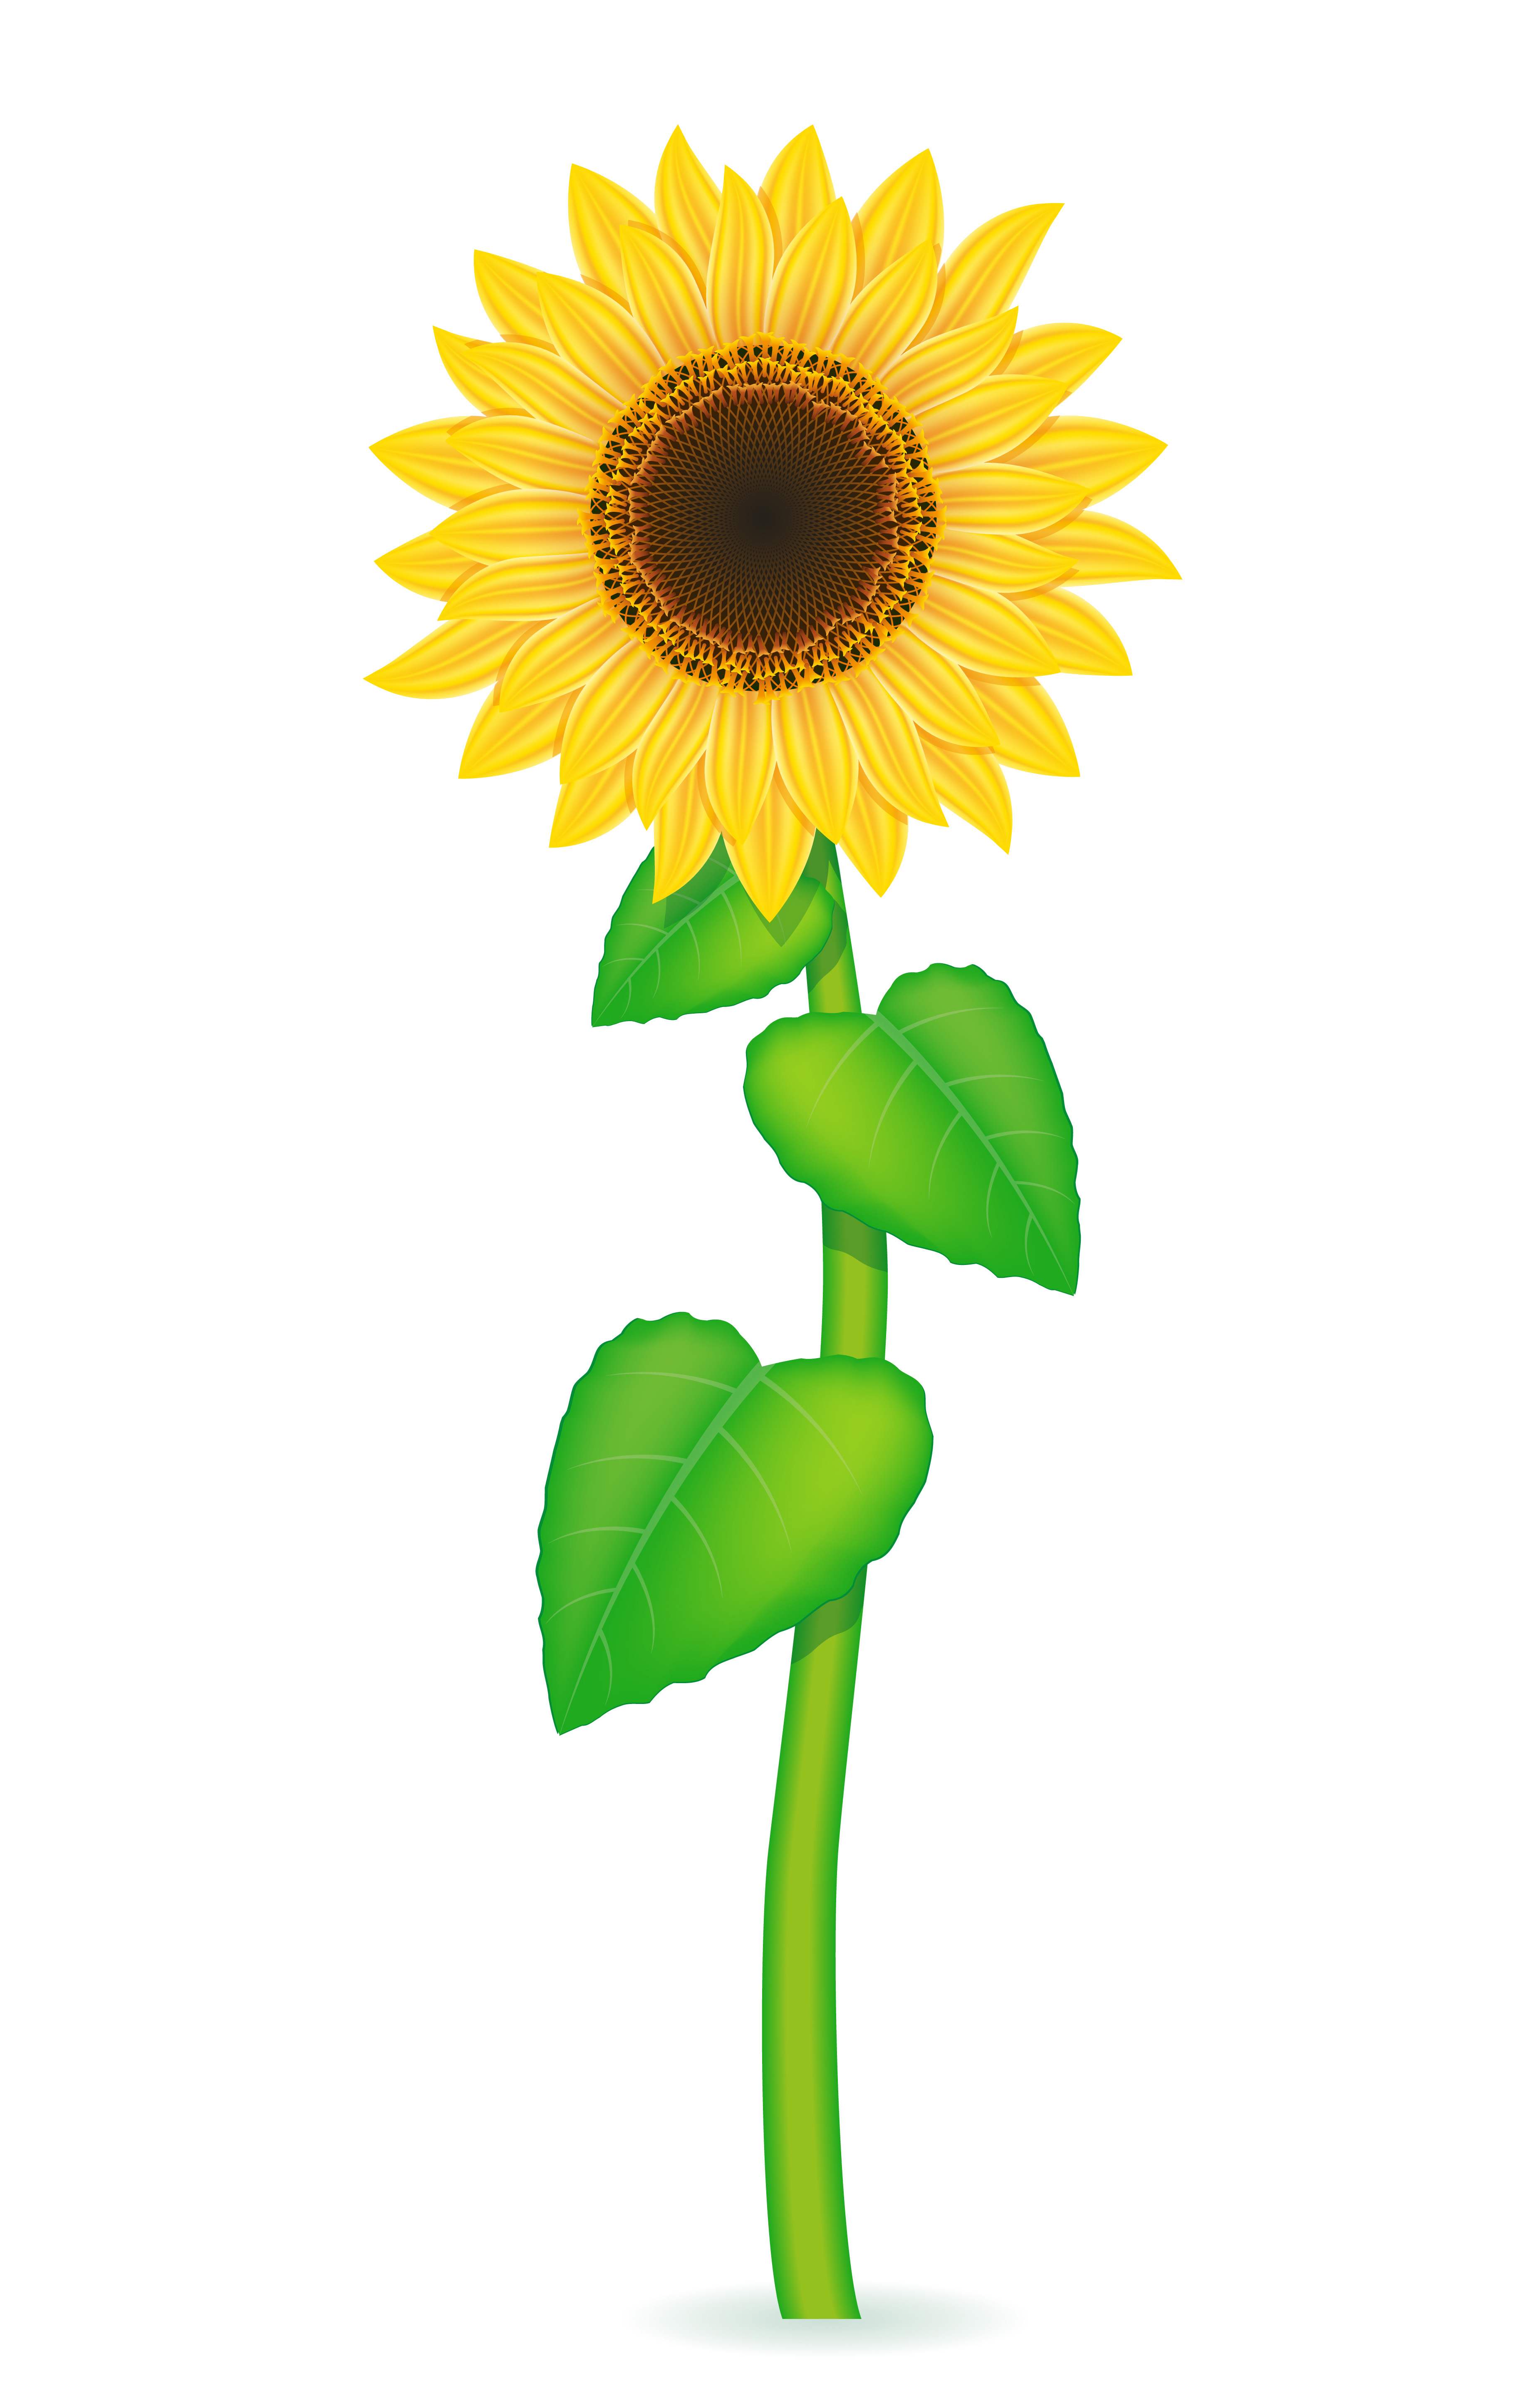 sunflower vector illustration - Download Free Vectors ...